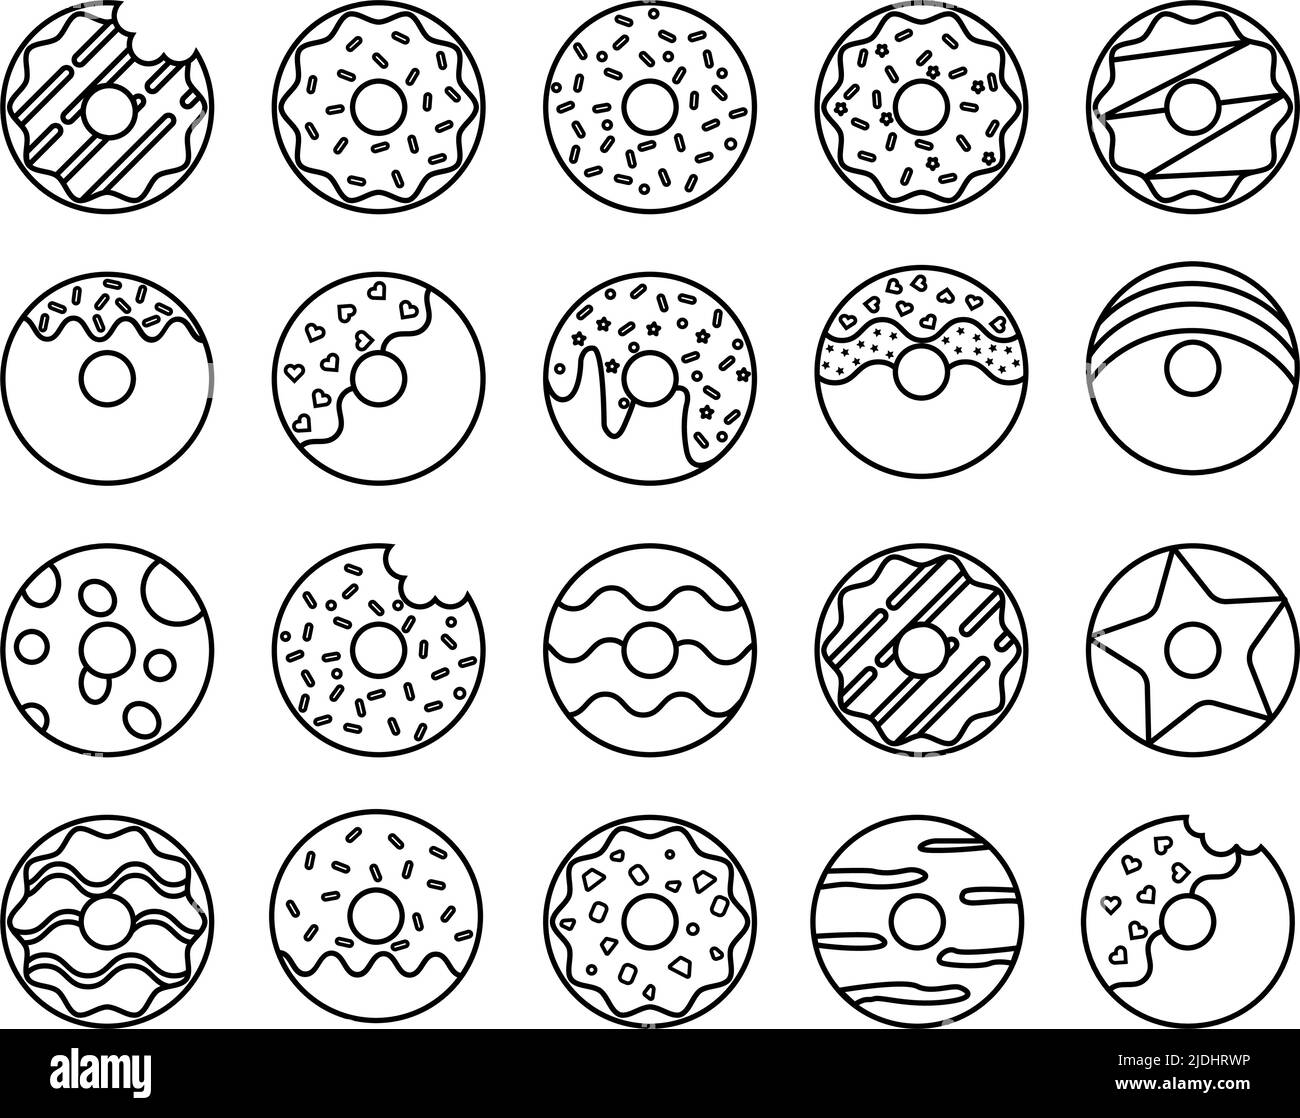 Donuts design vector set. 20 pixel perfect icons Stock Vector